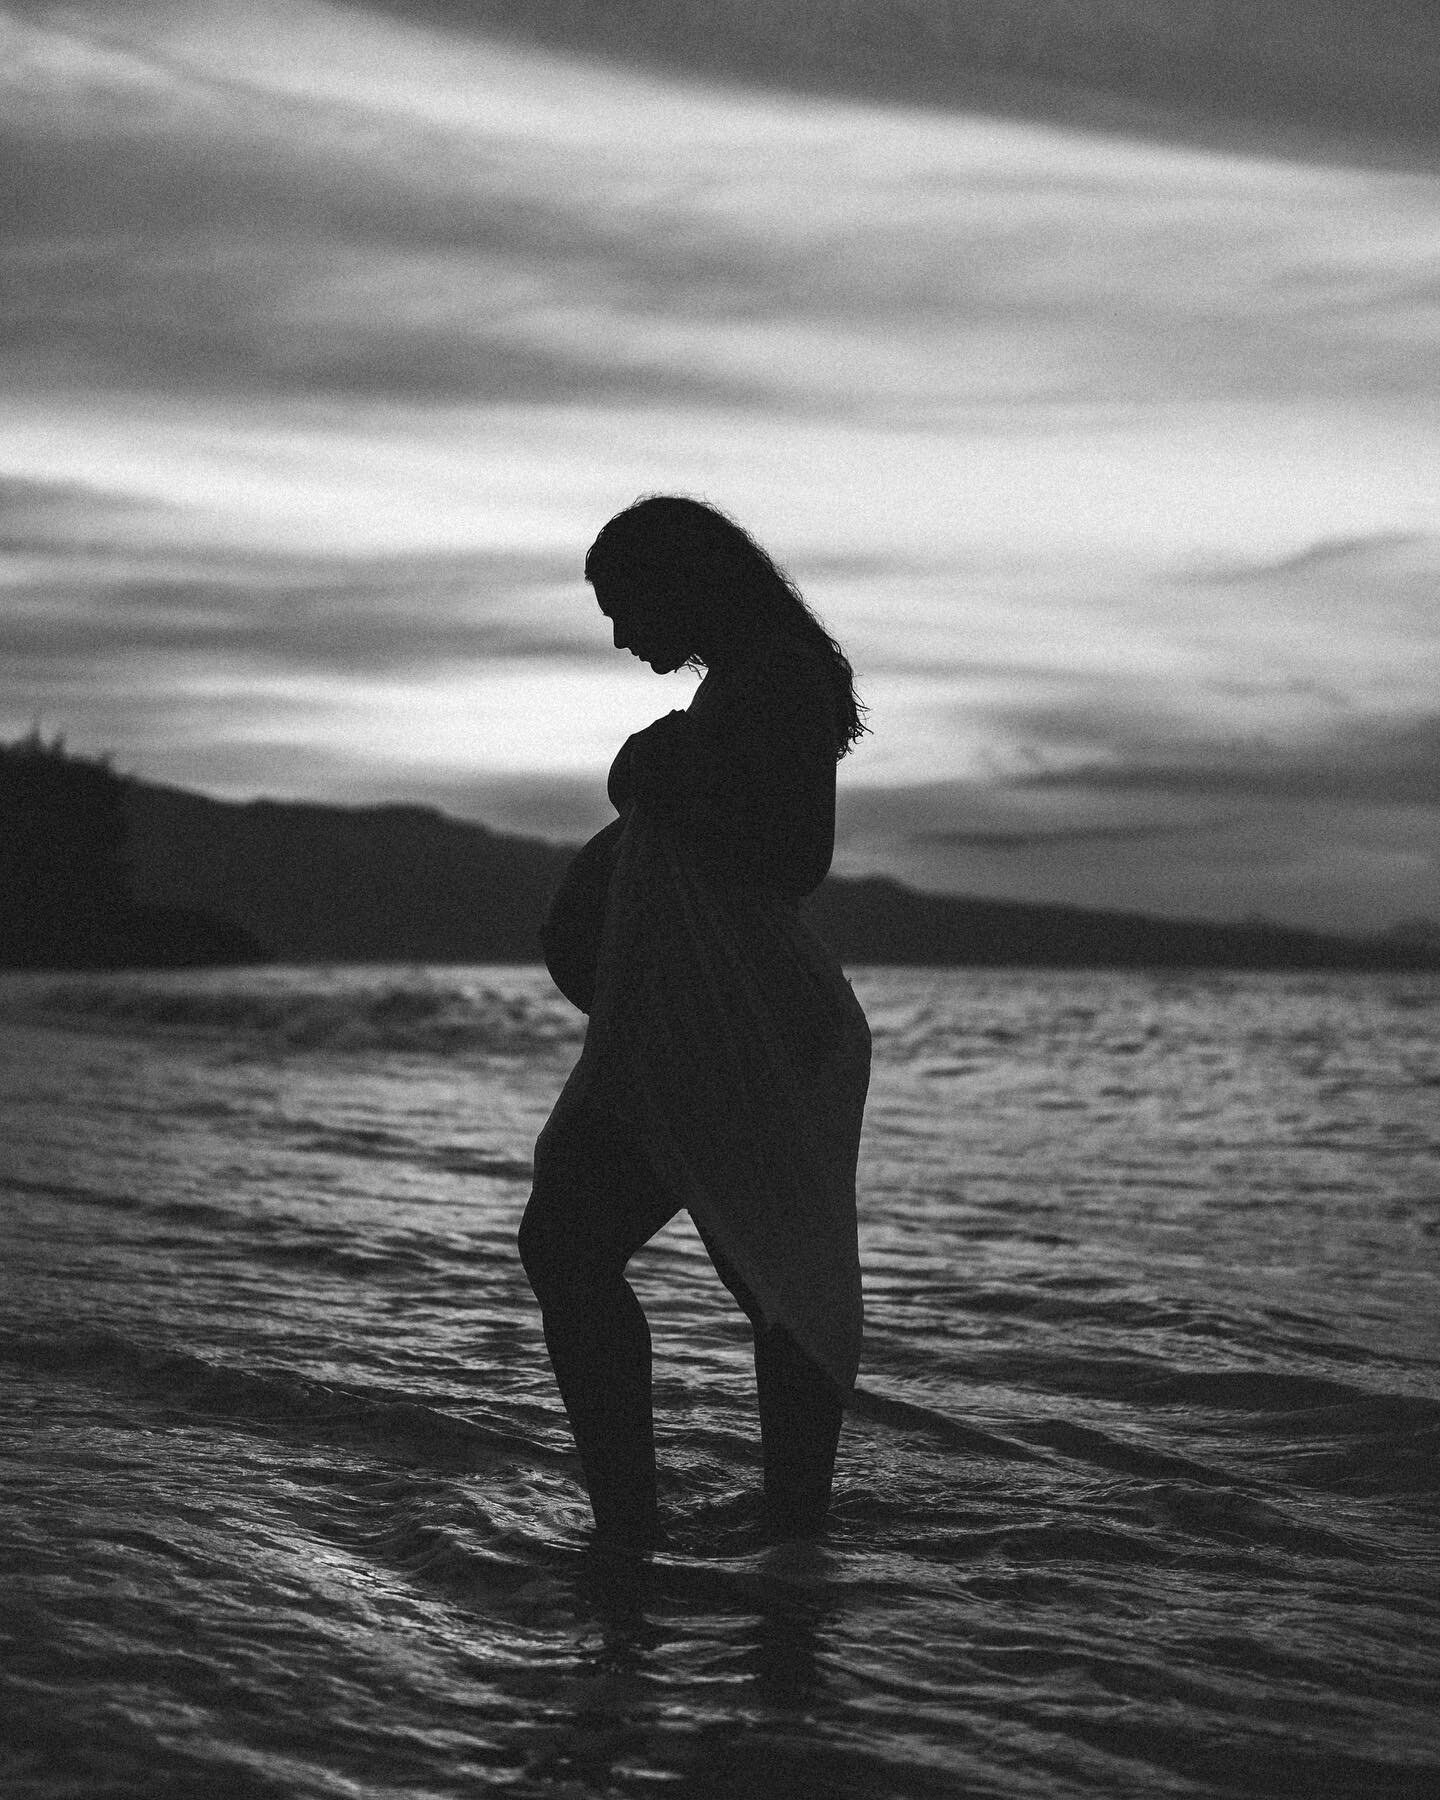 When the ocean matches the sky &hellip;
&bull;
&bull;

#familyphotos #maternityphotography #maternity #babymoon #mauibabymoon #mauibabymoonphotographer #mauifamilyphotography  #hawaii #weddingphotographer #elopementphotographer #elopement  #mauiphoto